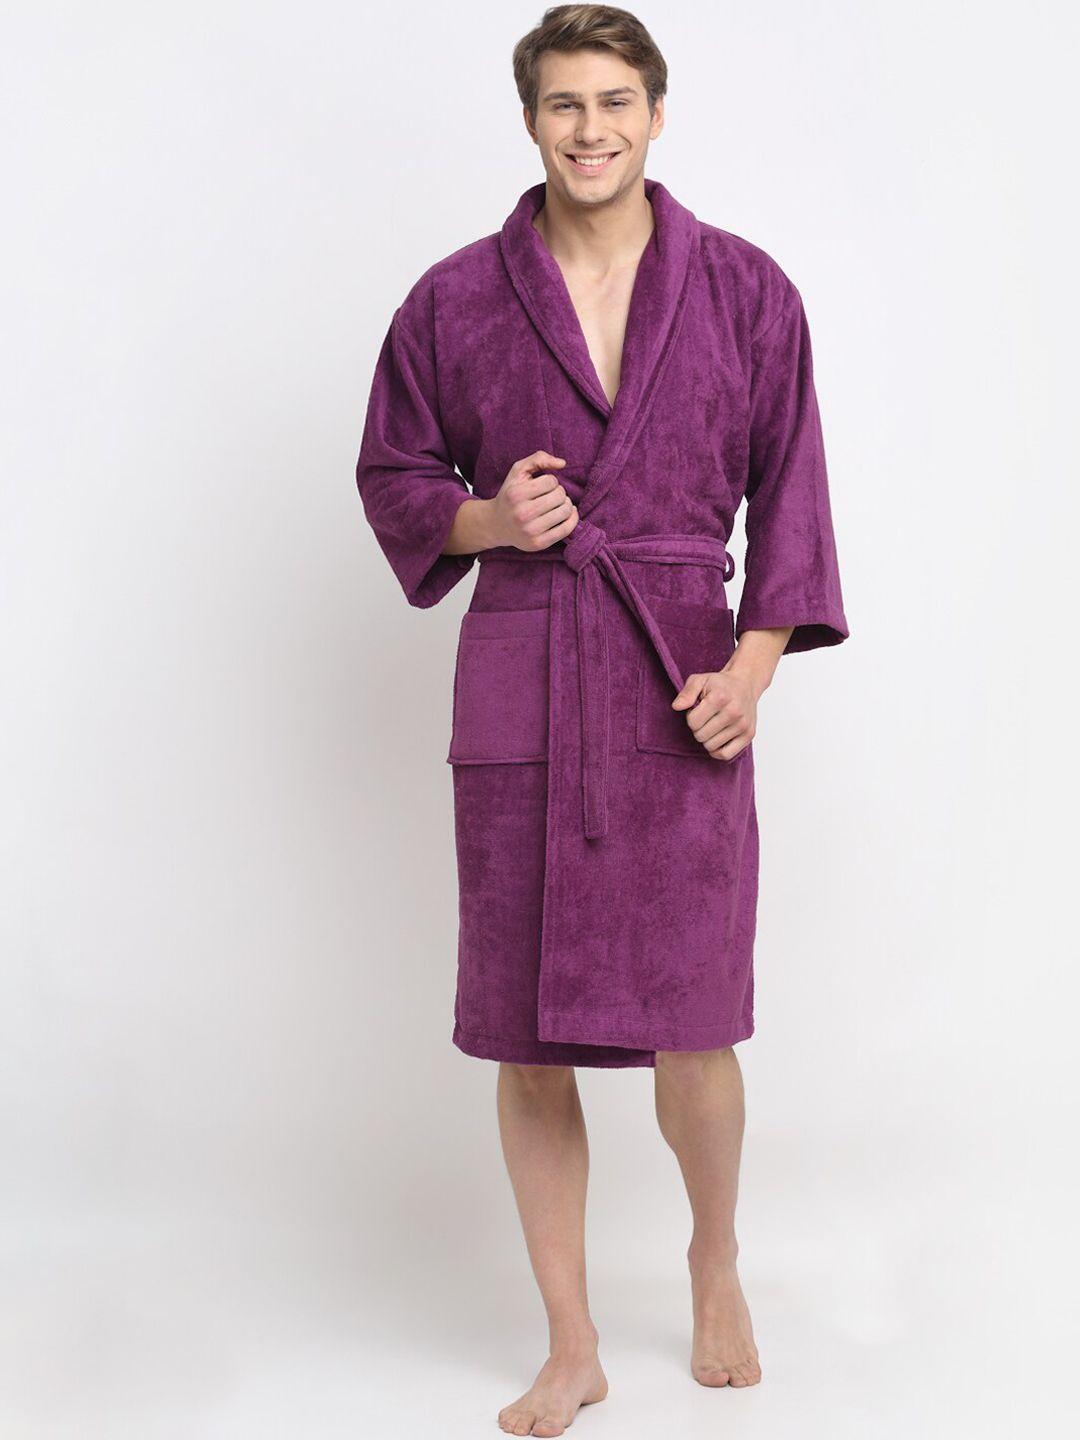 creeva unisex purple solid terry cotton bath robe with pockets